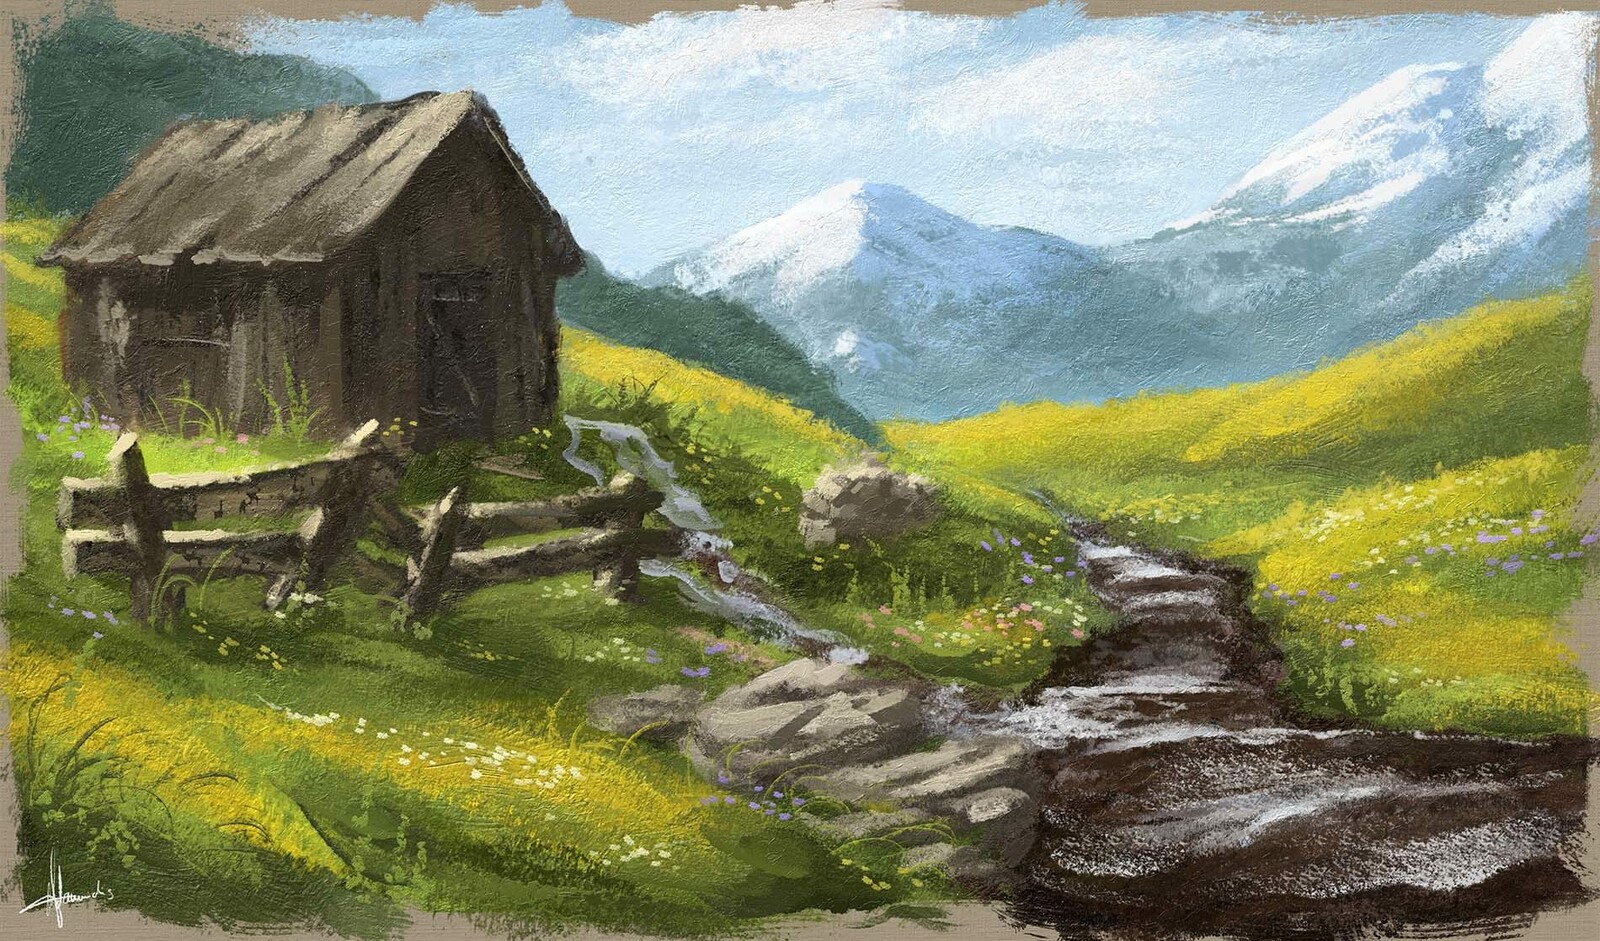 Digital Landscape / Scenery Painting - Barn